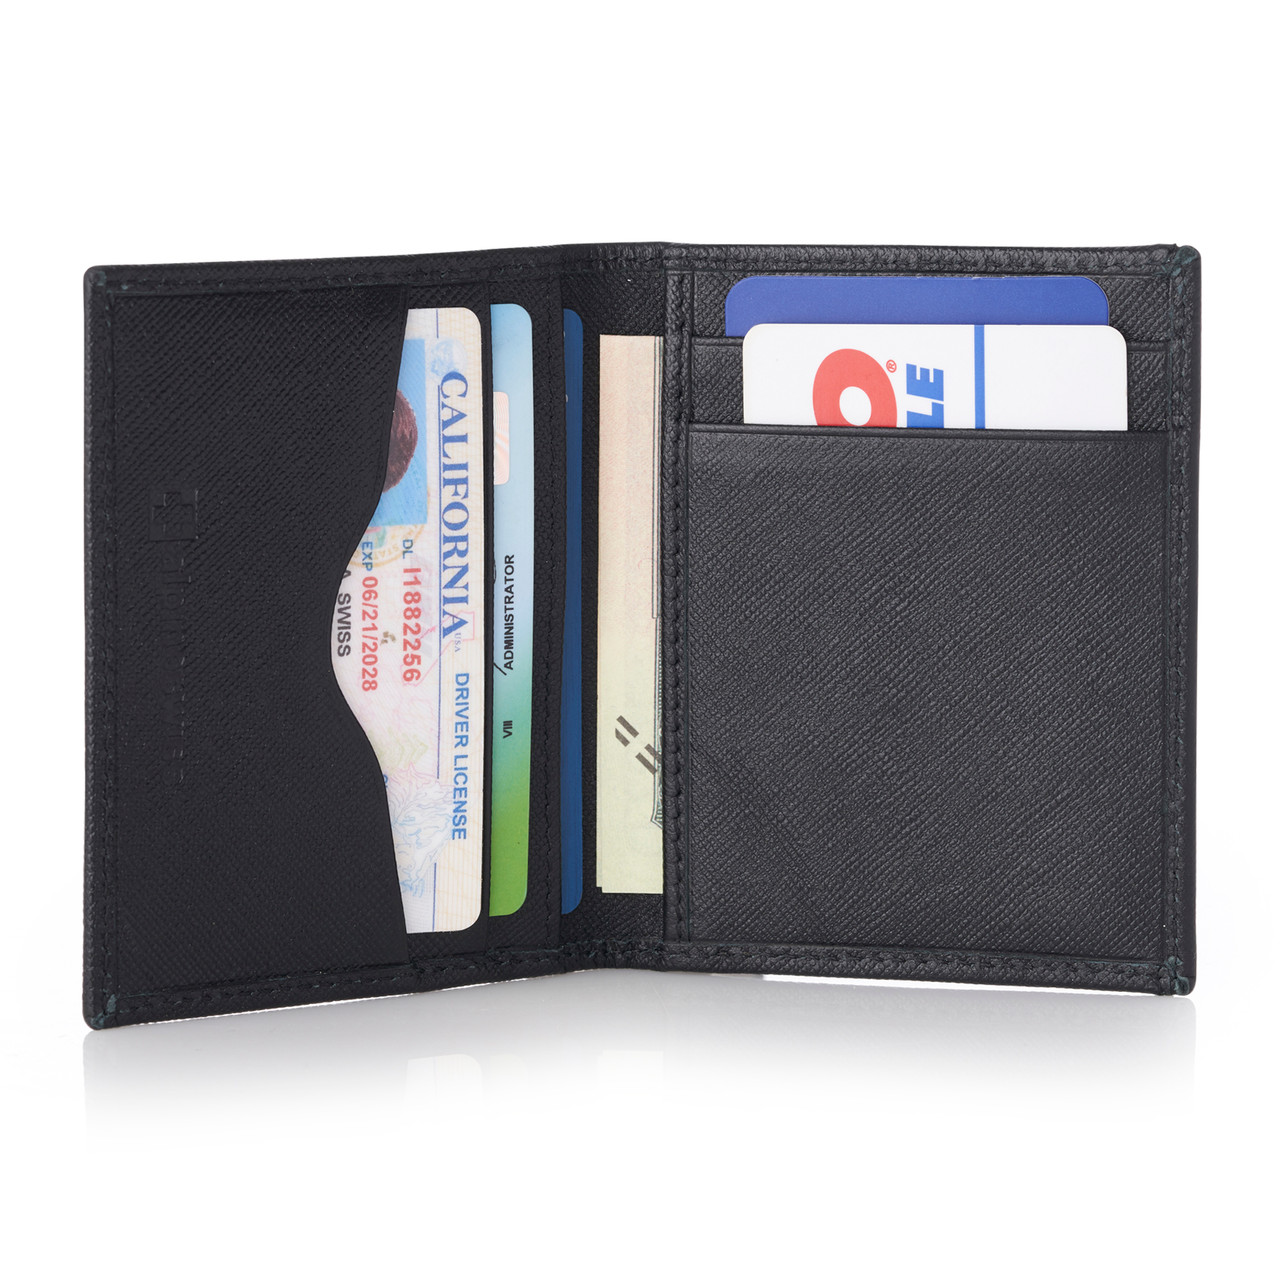 Alpine Swiss Genuine Leather Thin Business Card Case Minimalist Wallet